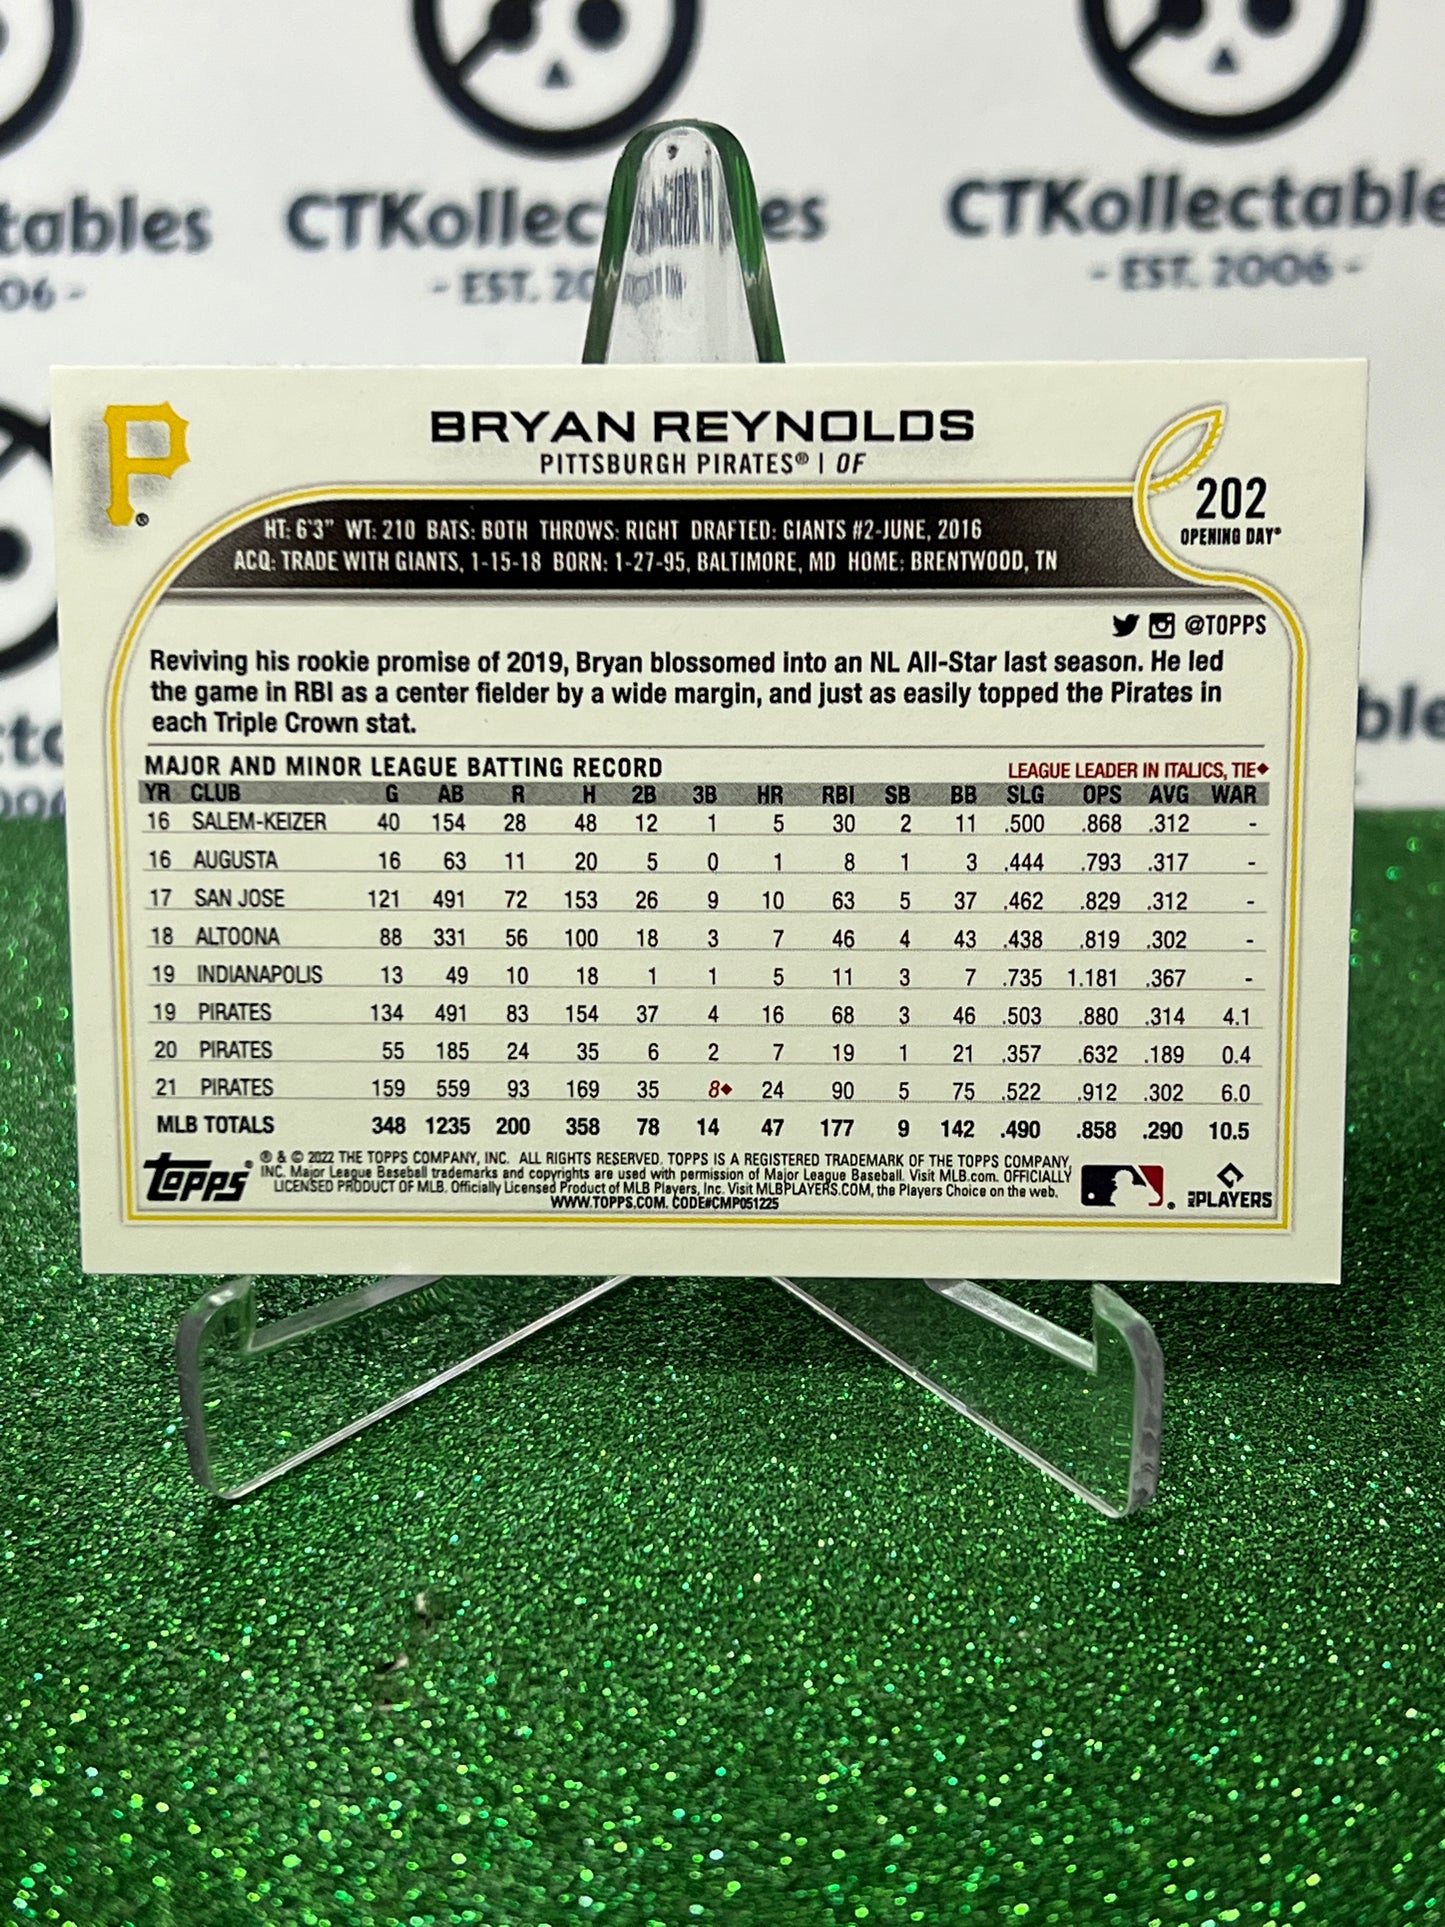 2022 TOPPS OPENING DAY BRYAN REYNOLDS # 202 PITTSBURGH PIRATES BASEBALL CARD